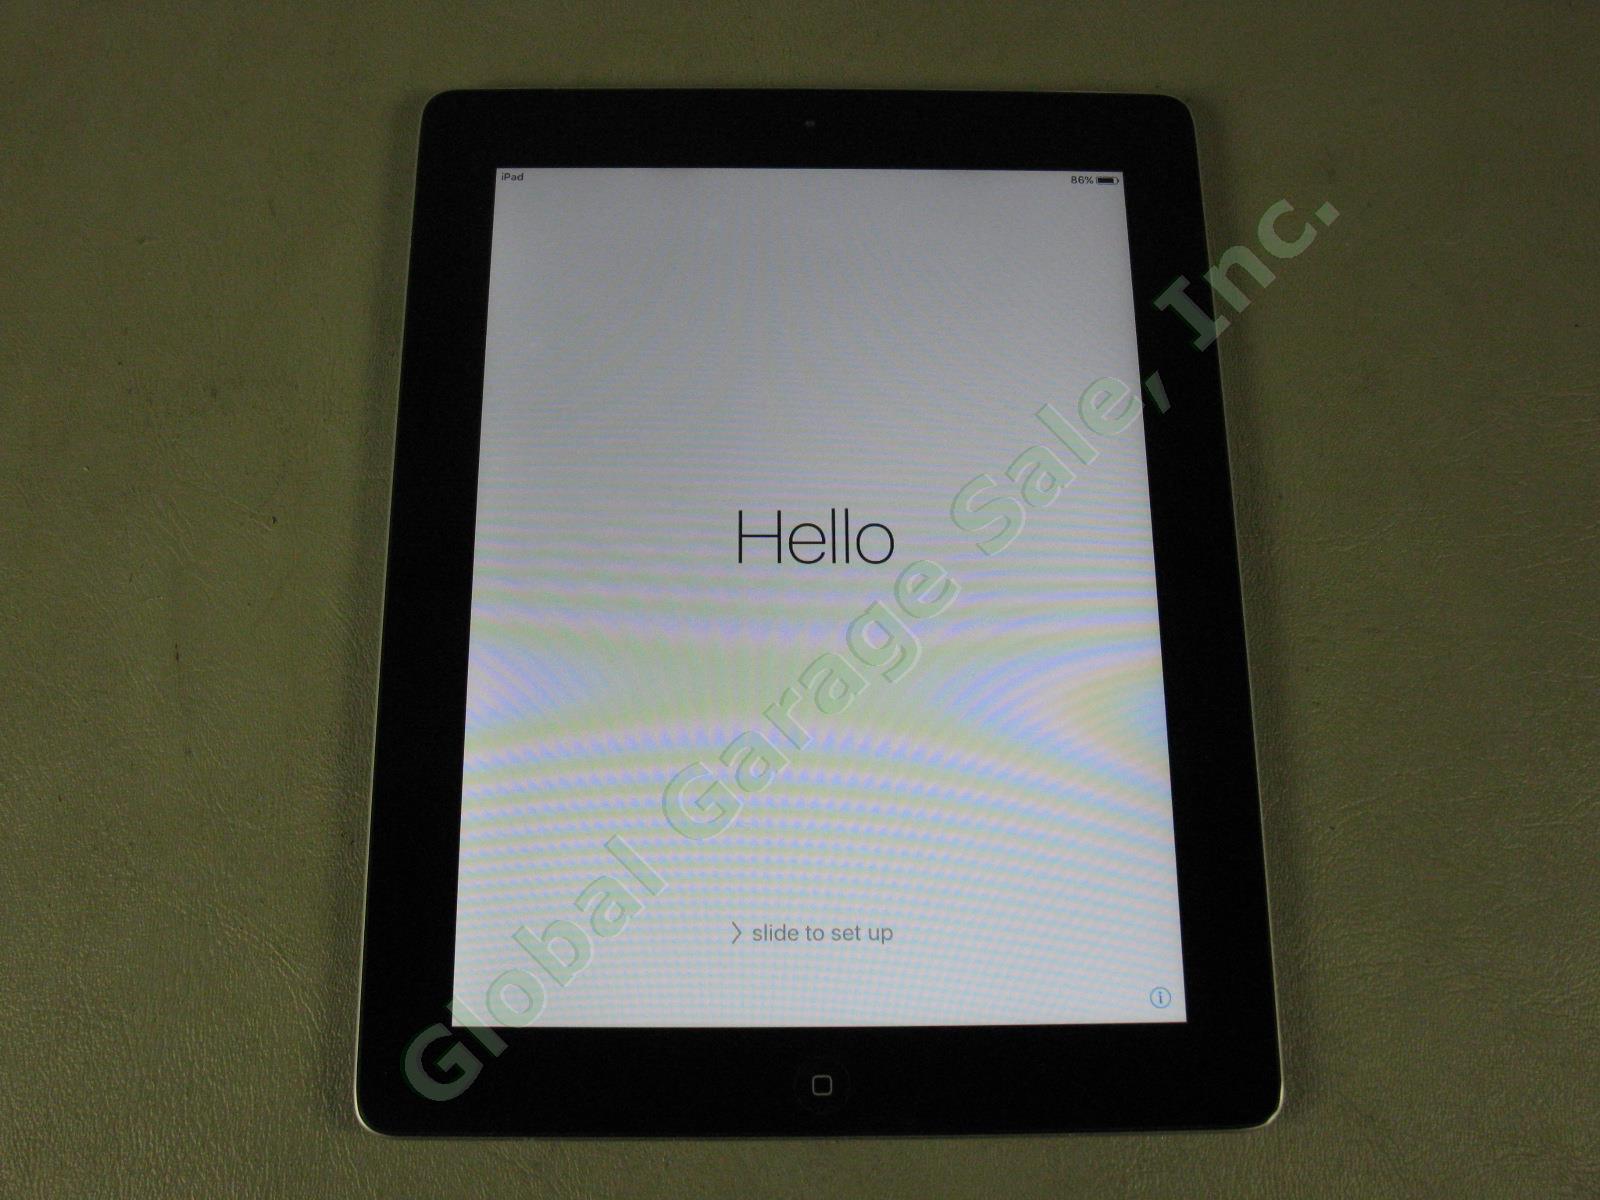 Apple iPad Mini 7.9" 2nd Gen A1489 16GB Wi-Fi Gray ME276LL/A (Renewed)  *READ